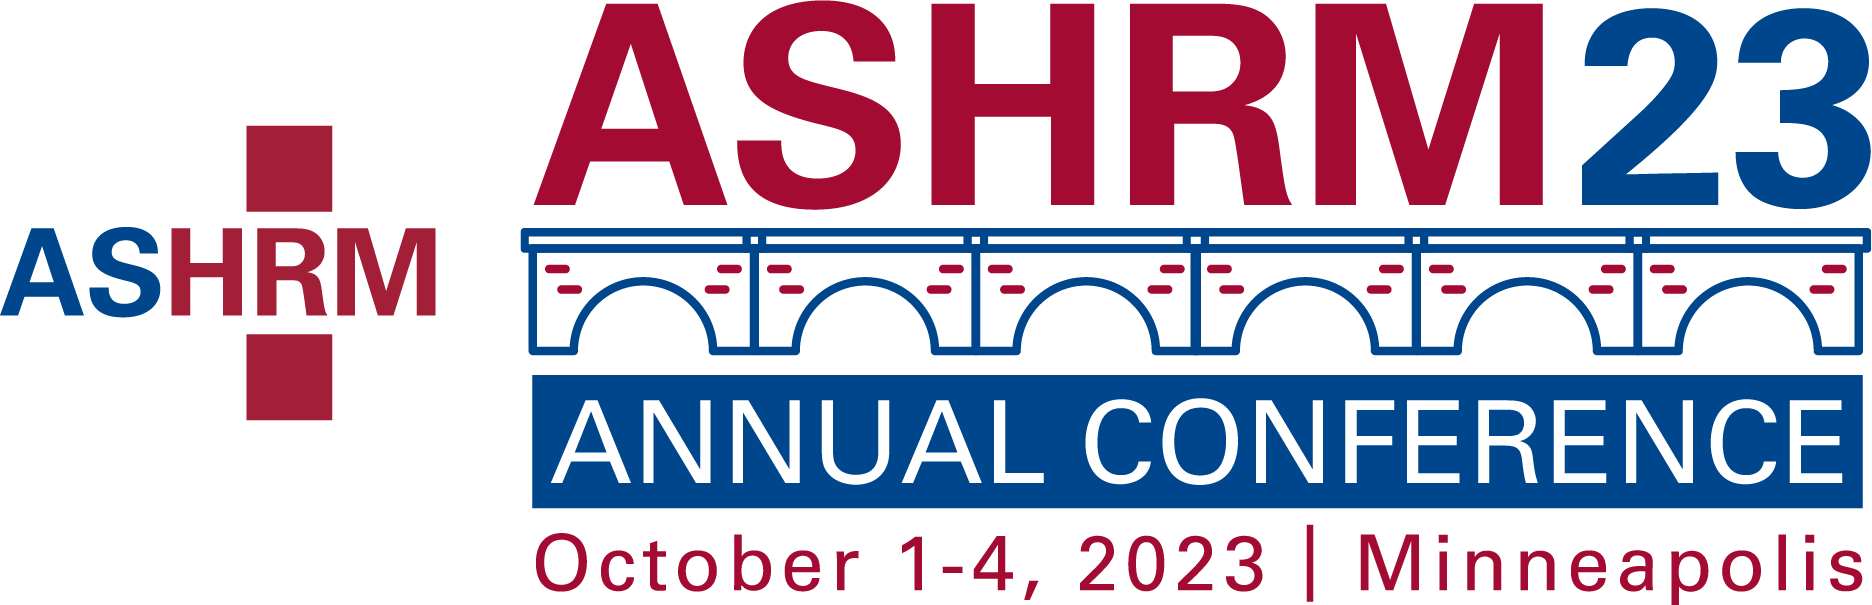 Conference & Events ASHRM Media Kit